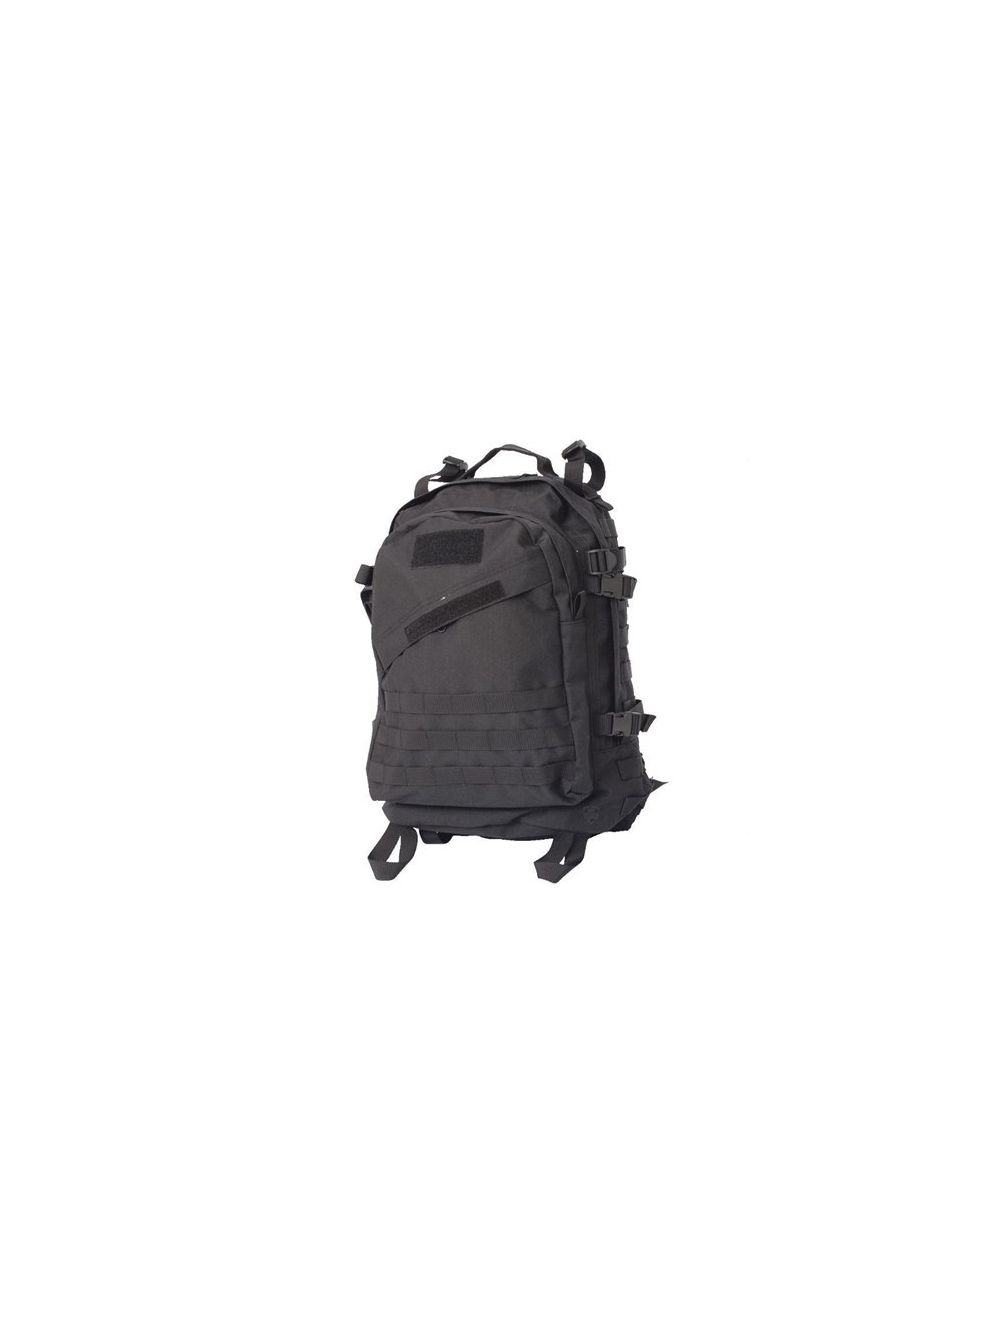 GI Spec 3-Day Military Backpack